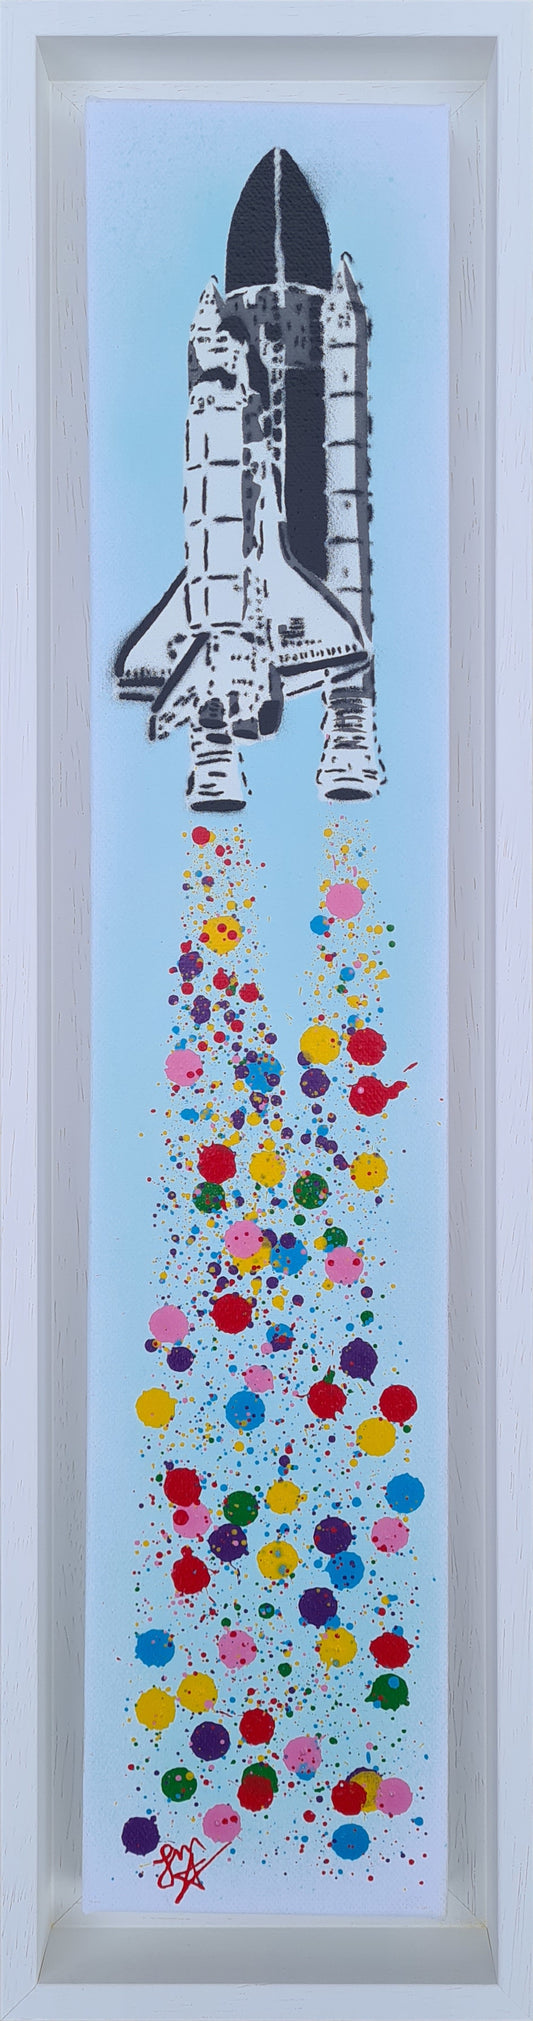 Rocket Man - Spray paint on canvas (Gift Sized Original)